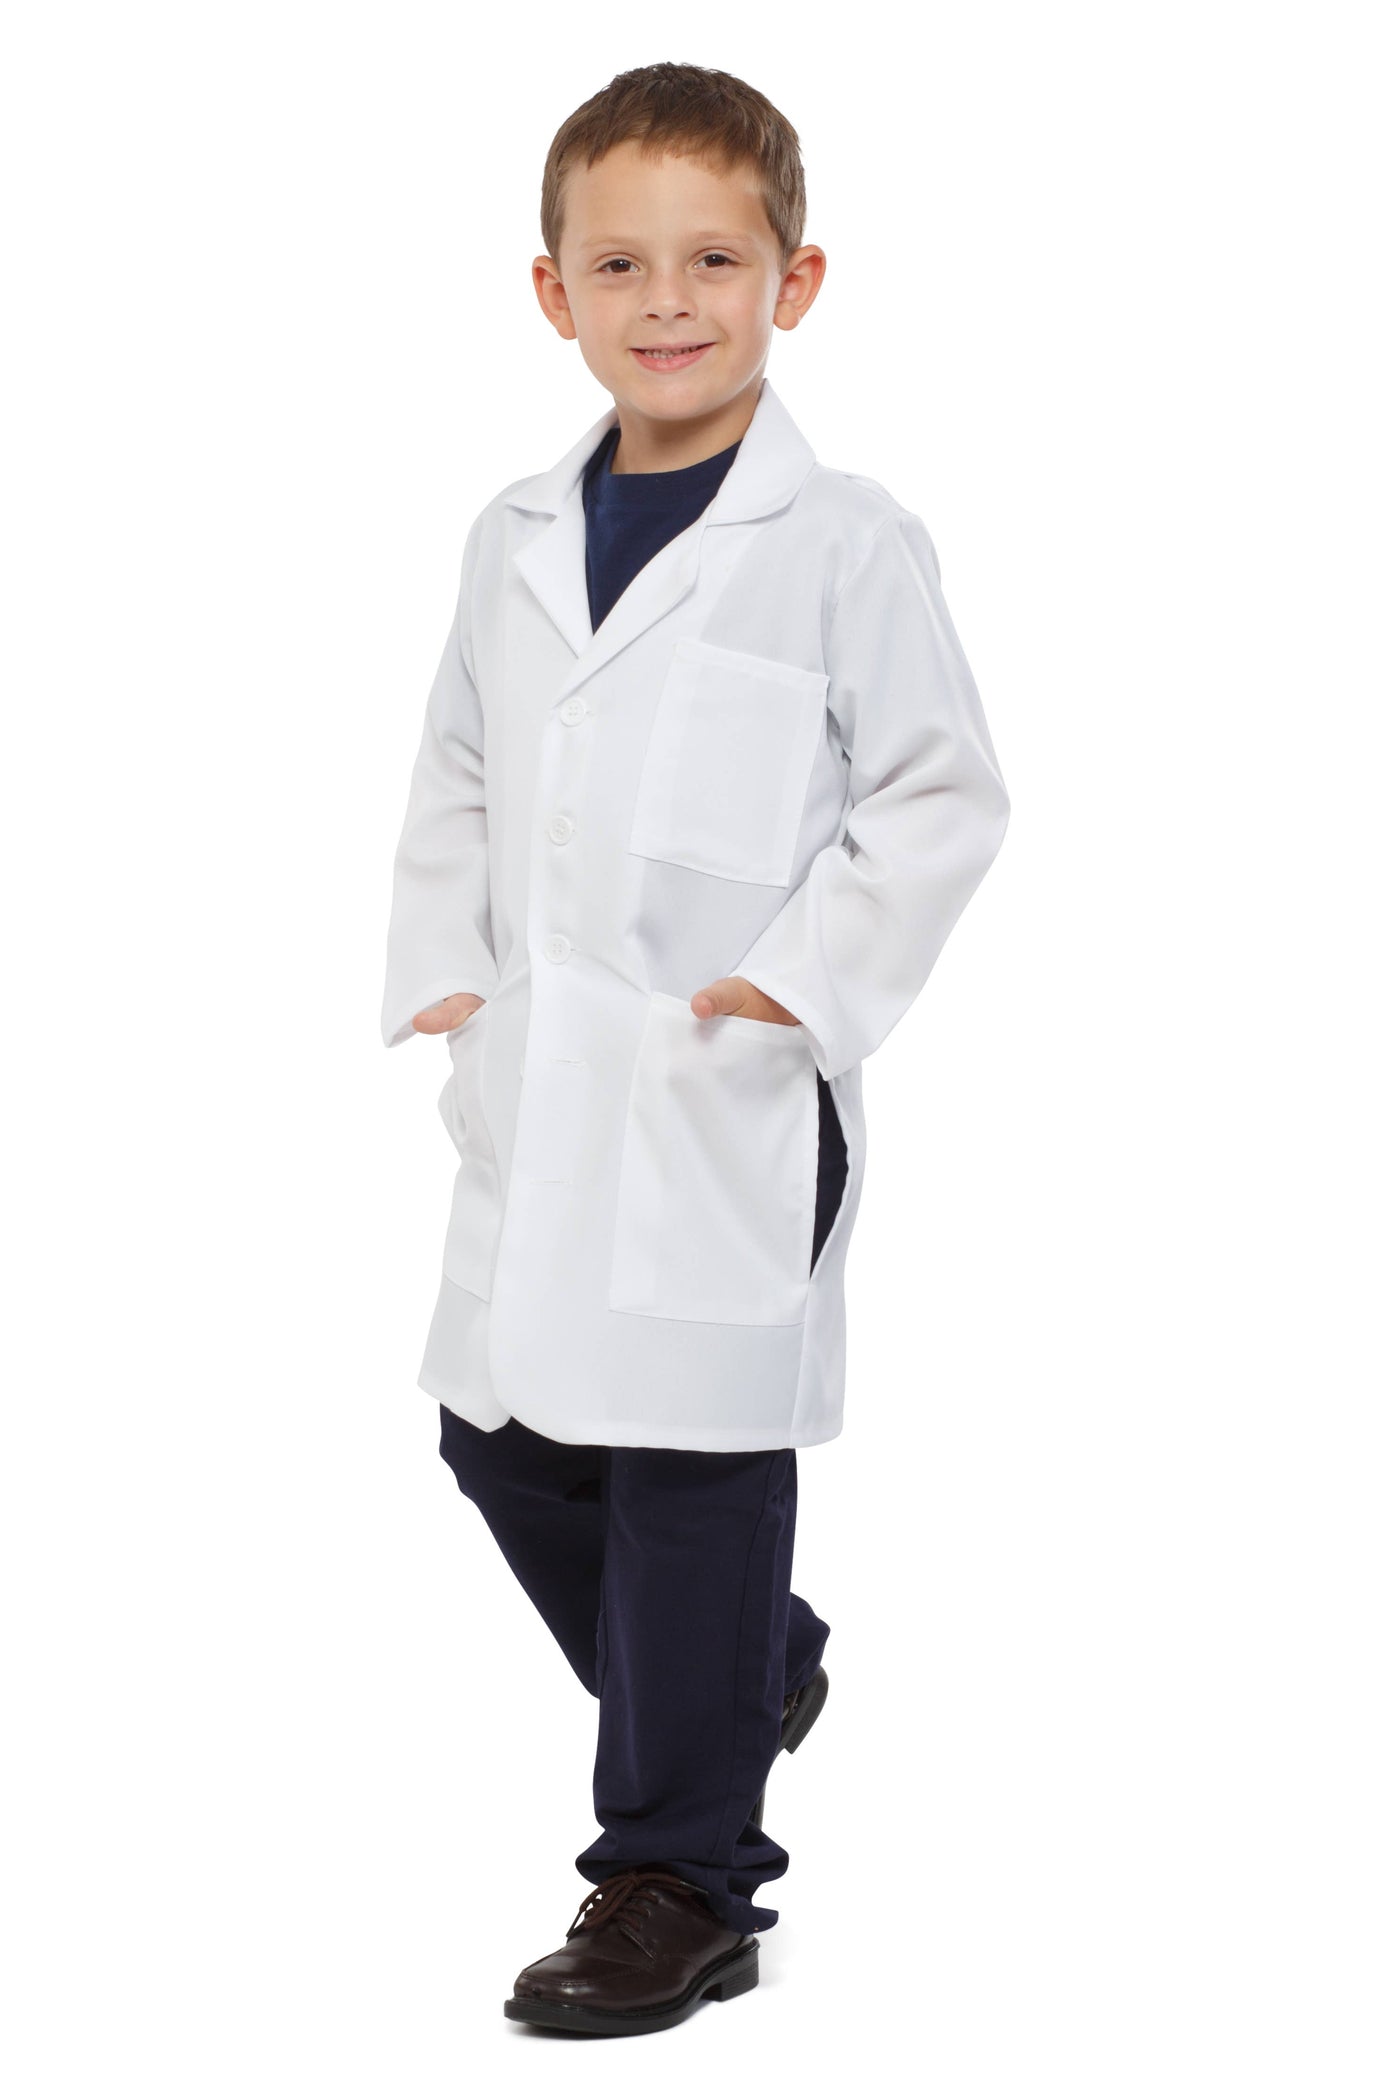 Lab Coat for Kids - Large